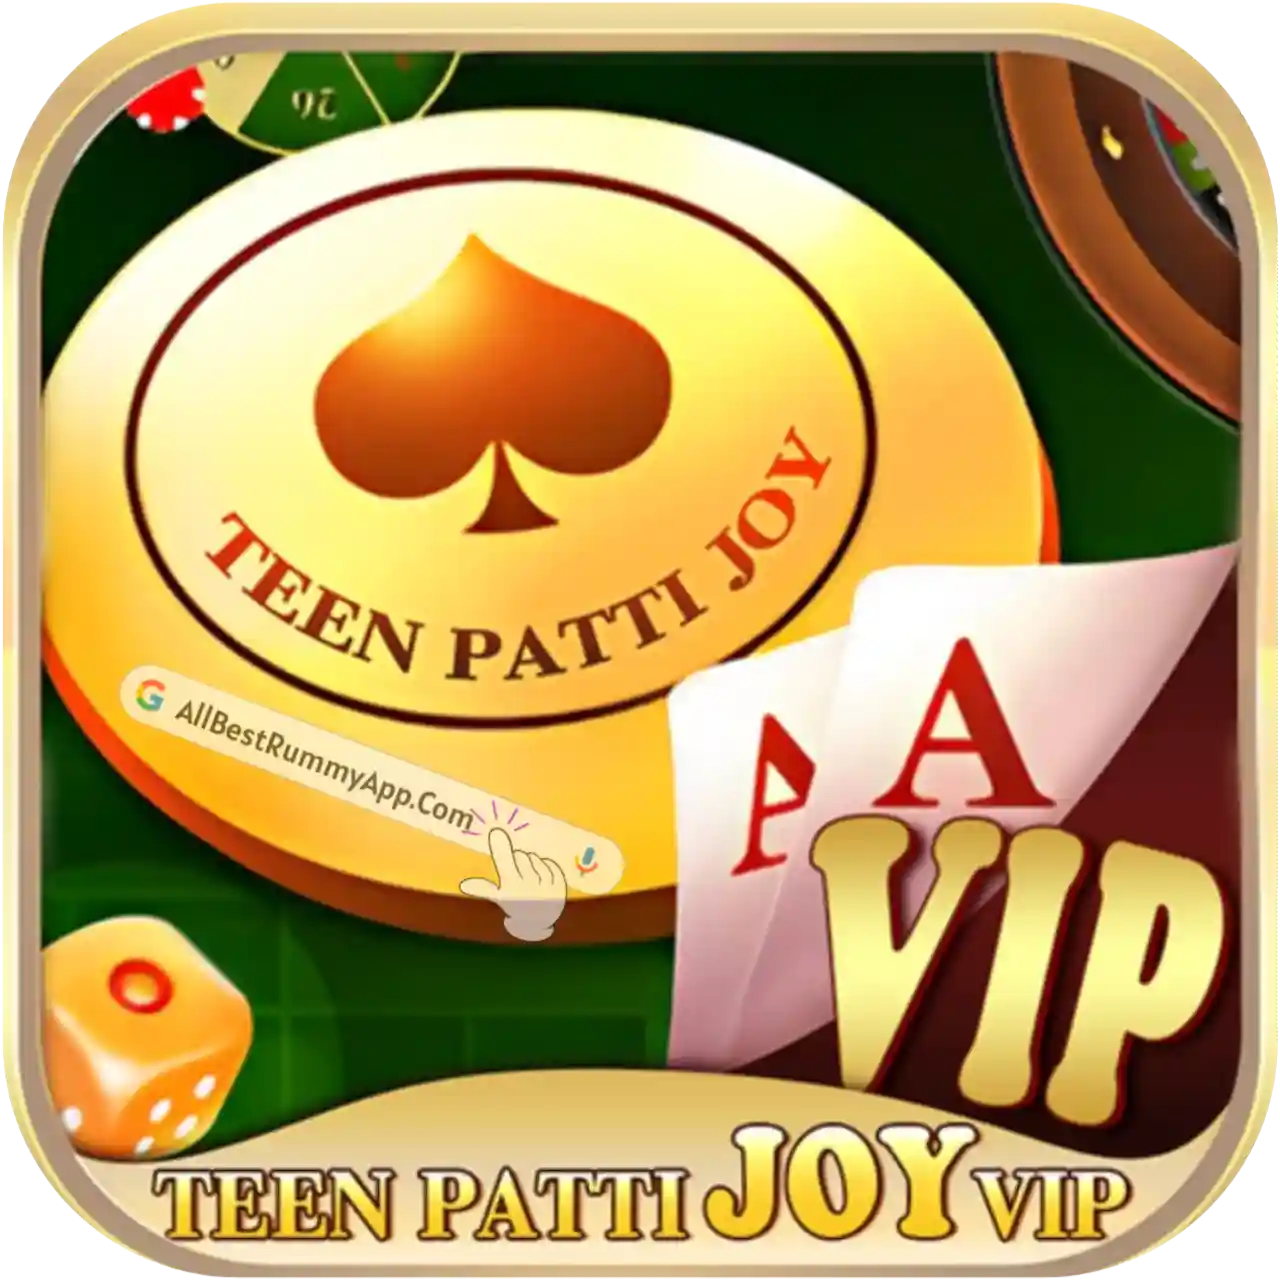 Teen Patti Joy Logo - All Best Rummy App